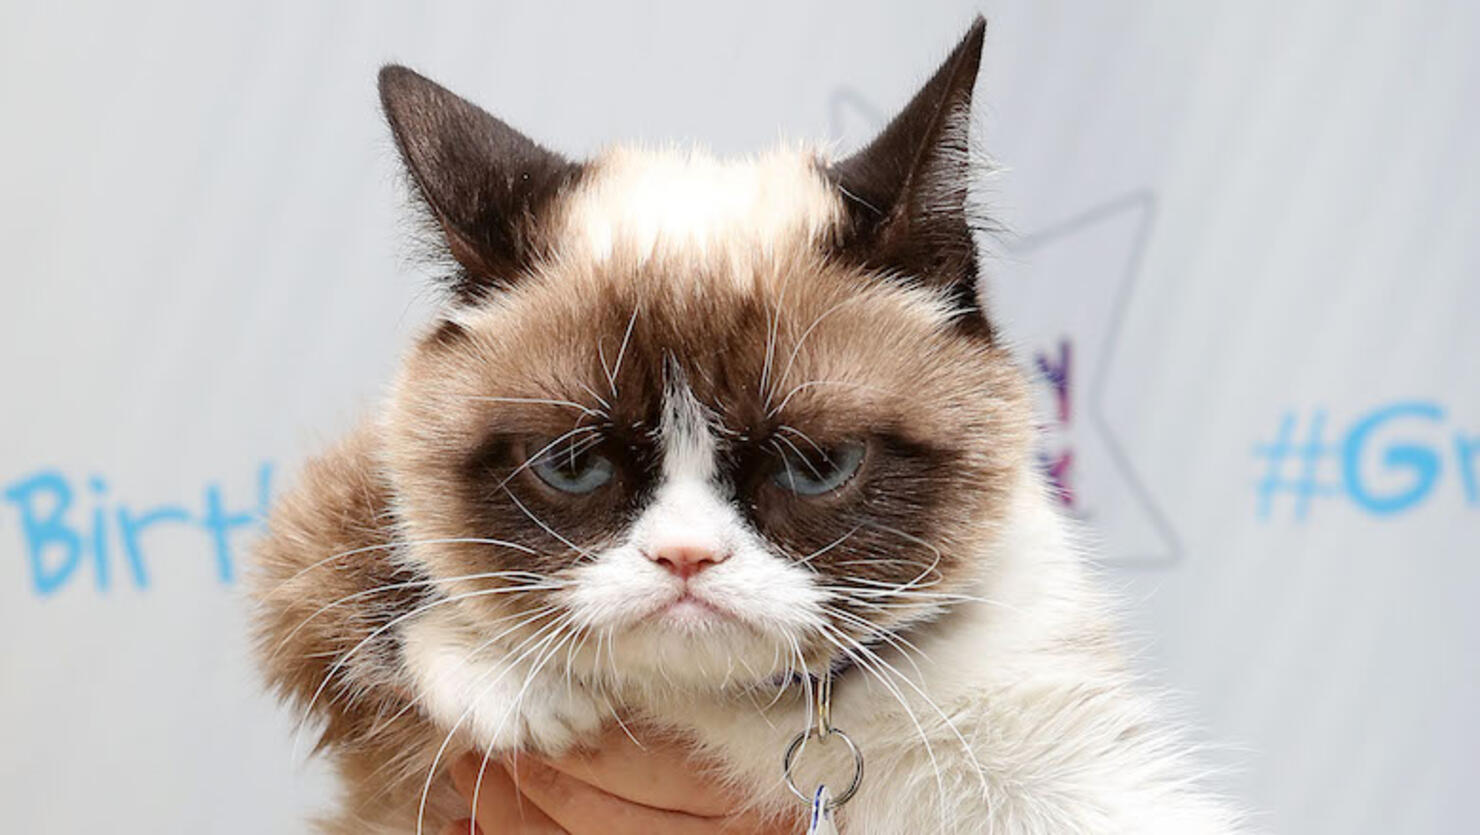 Grumpy Cat's "Grumpiest" Birthday Bash